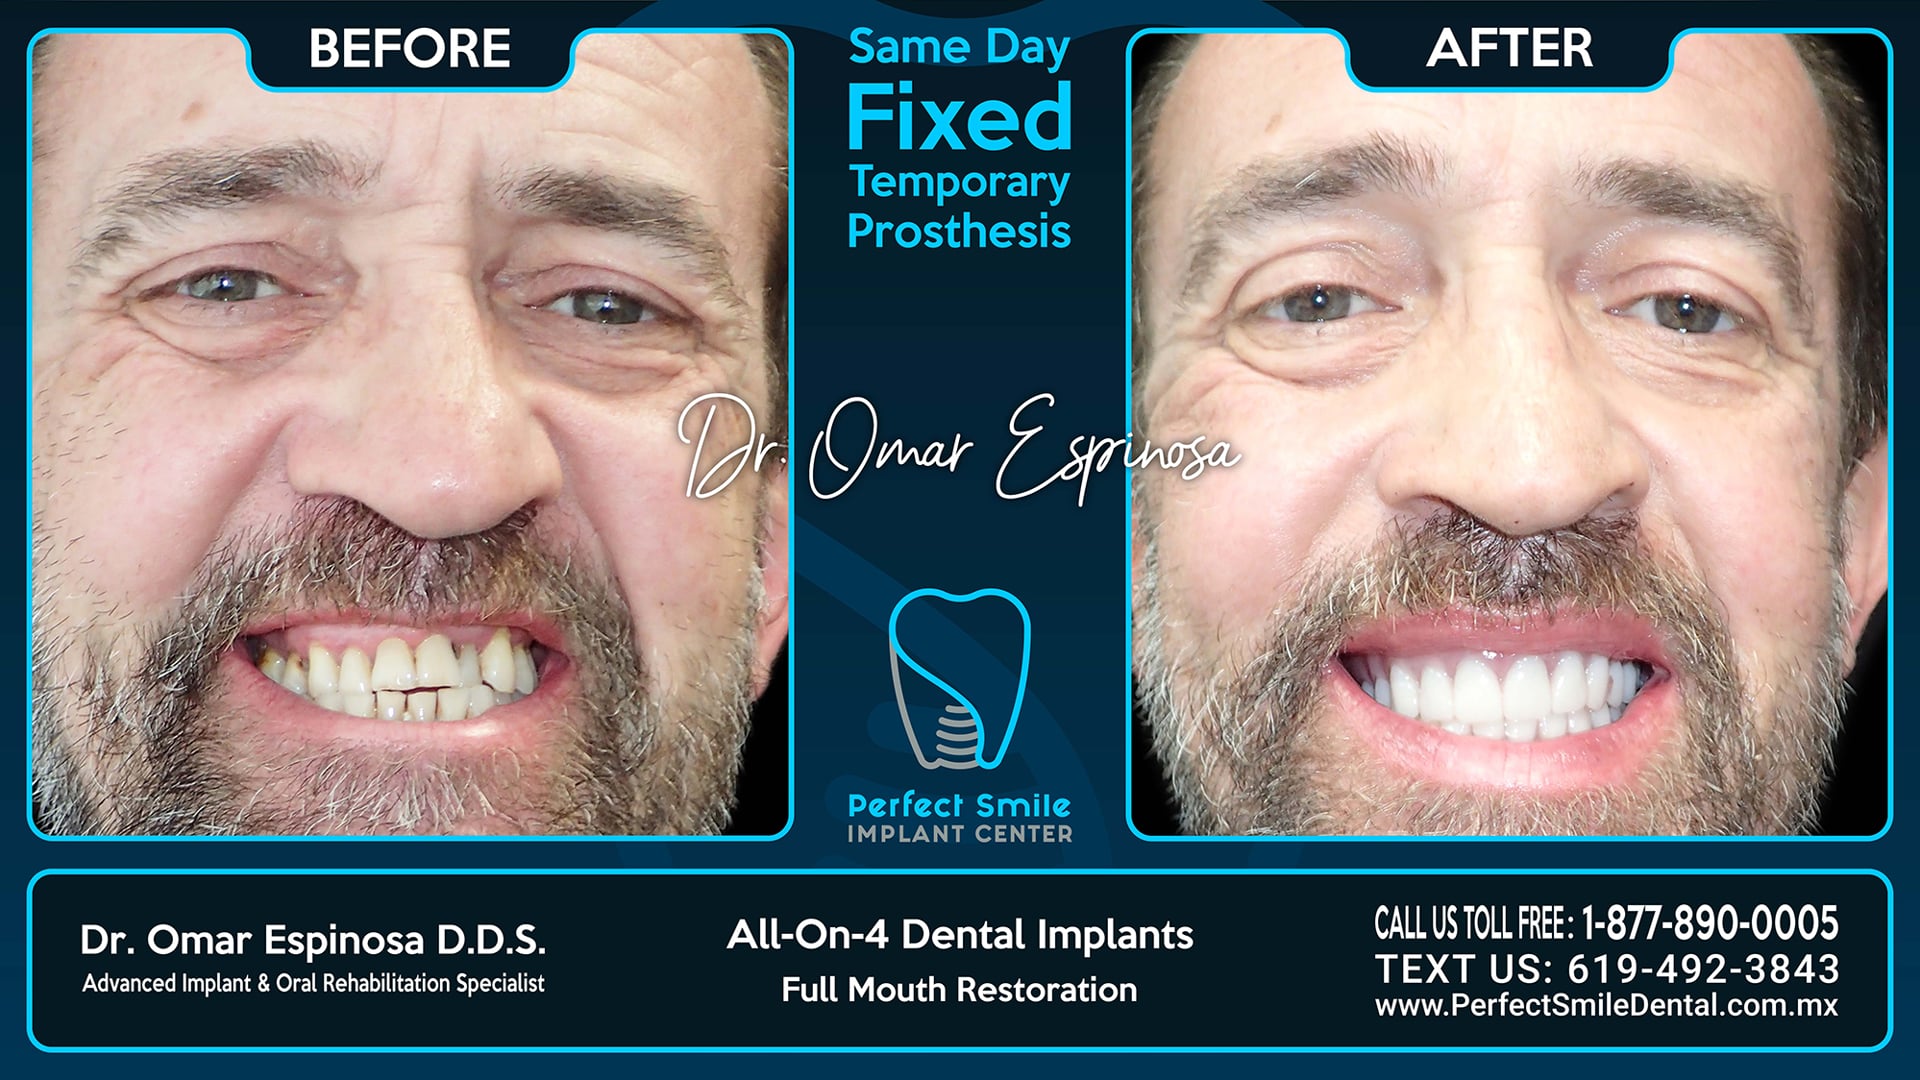 All On 4 Dental Implants Top & Bottom - Perfect Smile Implant Center - Tijuana, Mexico